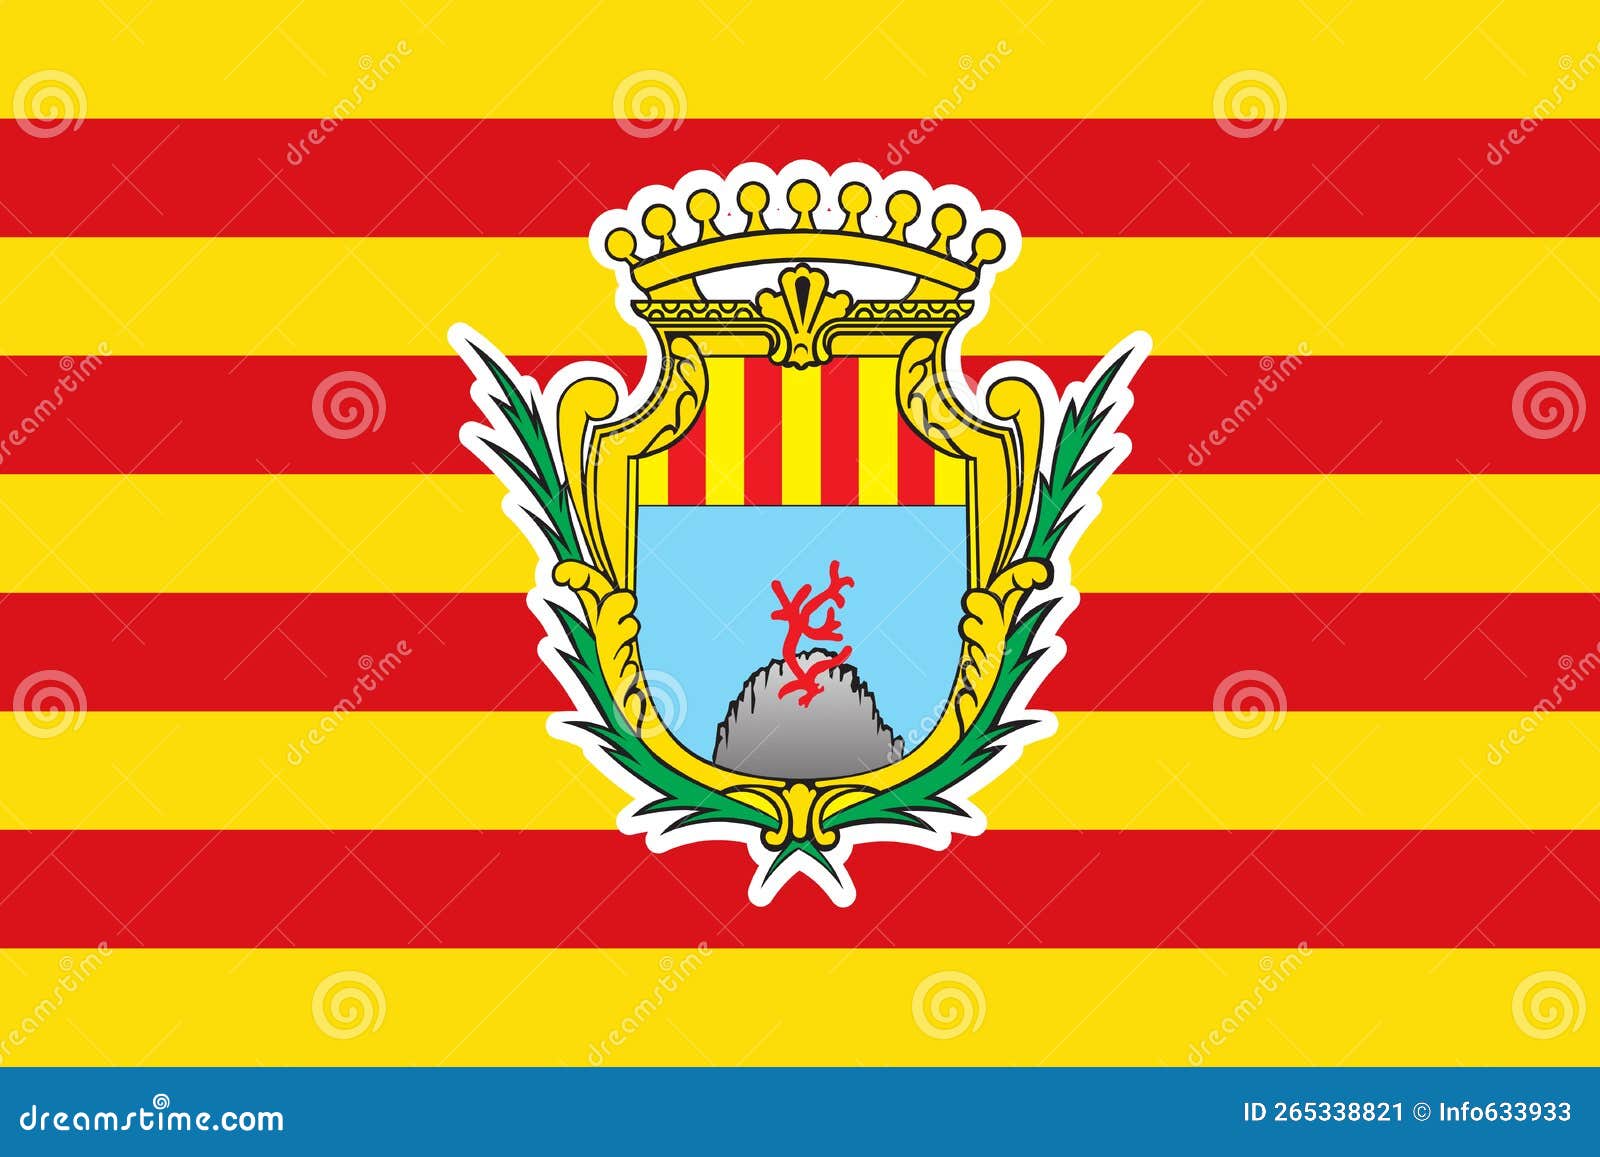 flag of ibero romance peoples algheresi. flag representing ethnic group or culture, regional authorities. no flagpole. plane